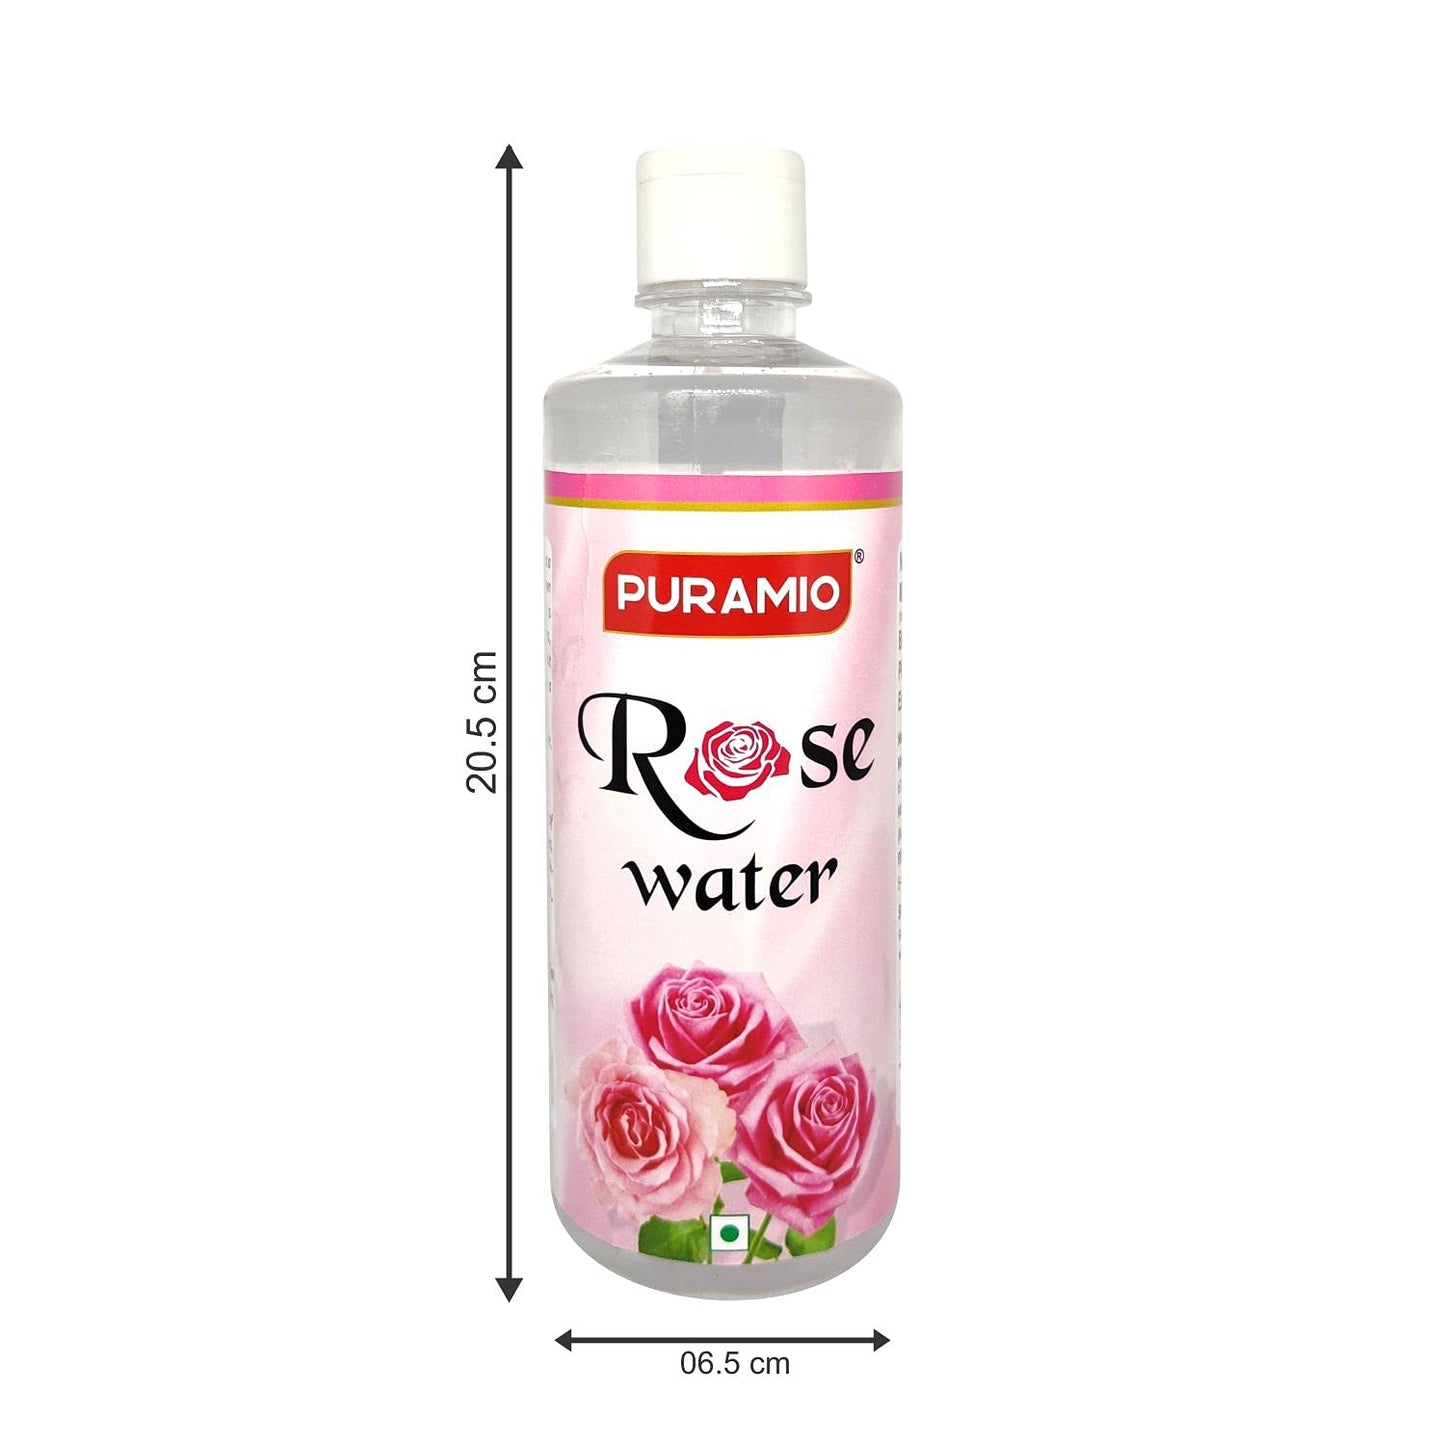 Puramio Combo Pack of - Rose Water, Khus Water& Kewra Water (for Biryani, Cooking & Cosmetic use), 500ml Each (Pack of 3)